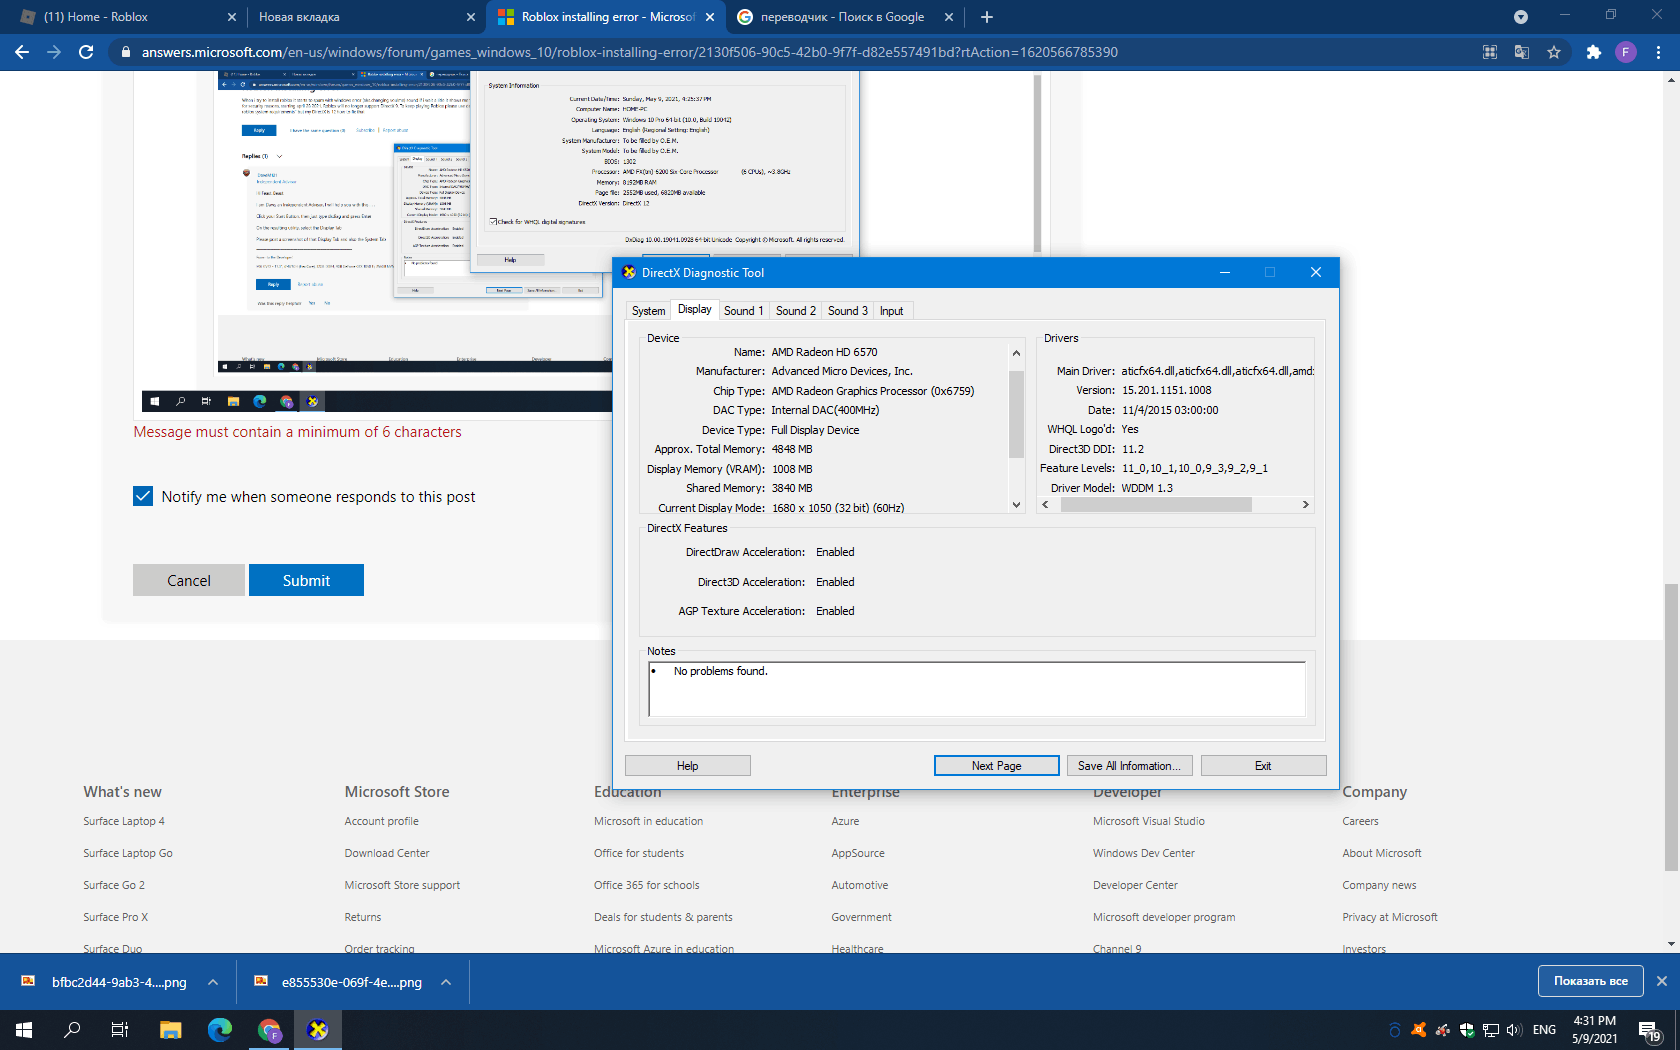 Directx 12 install - Microsoft Community